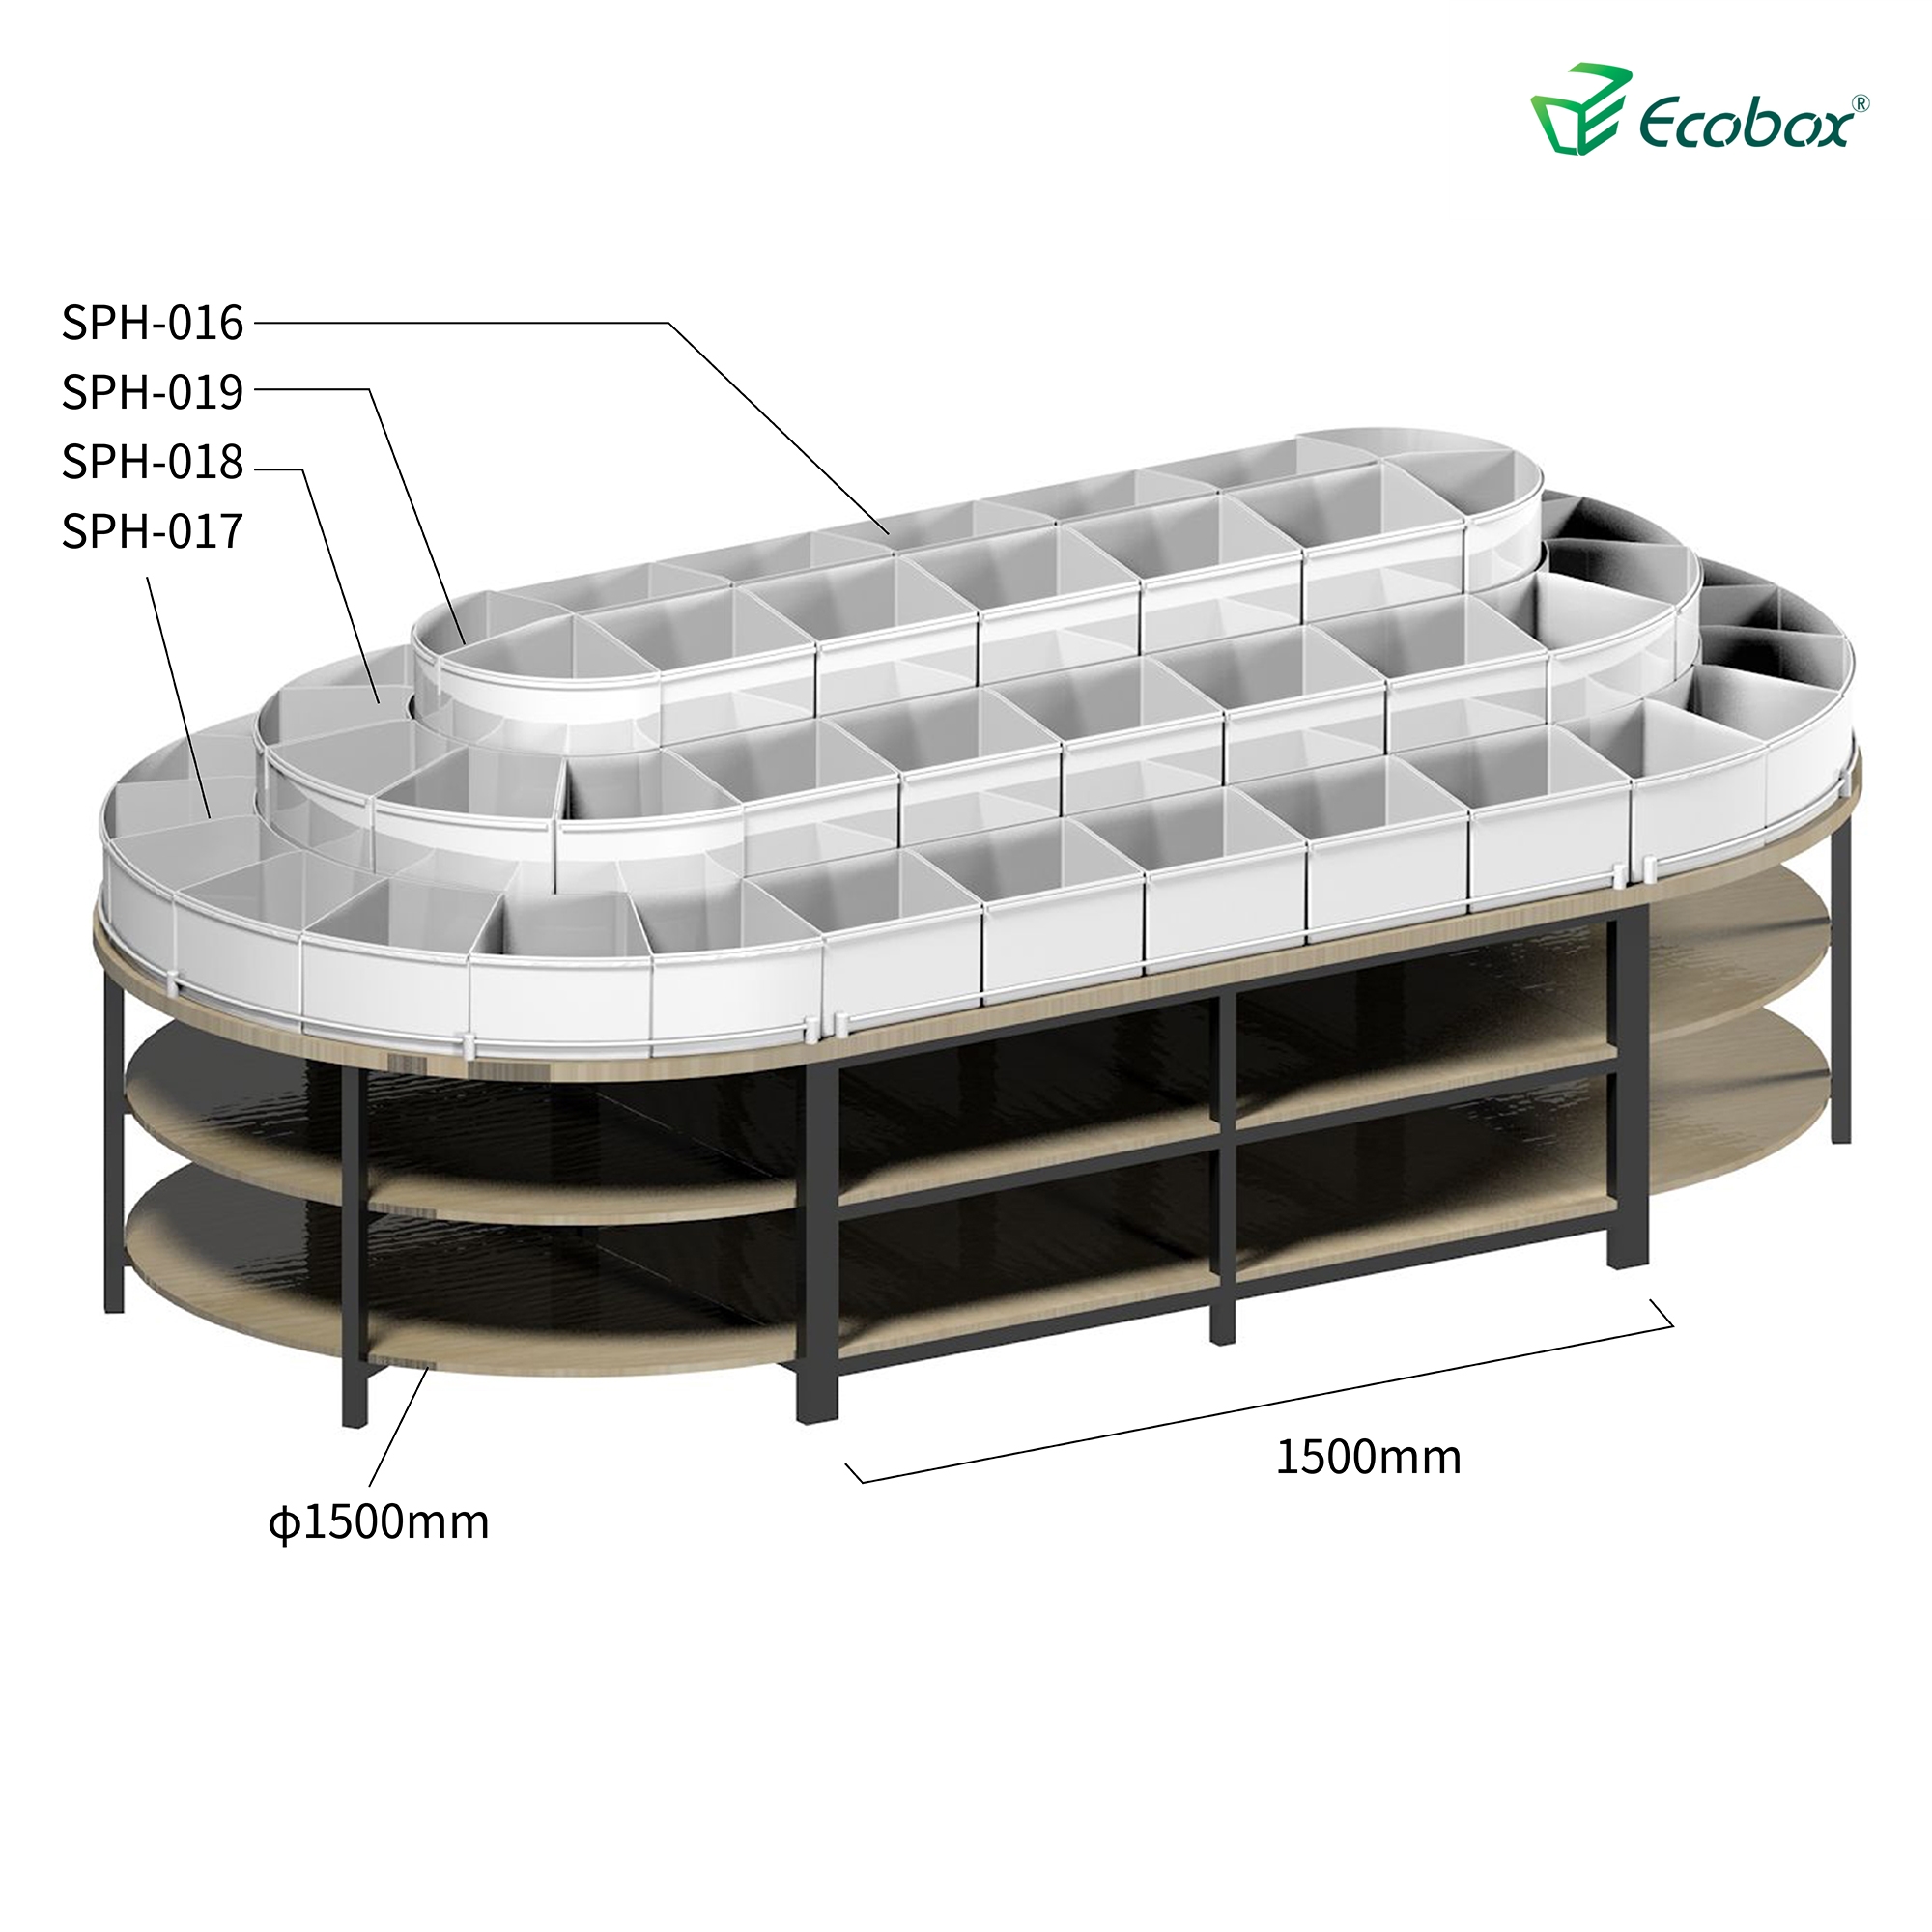 Ecobox G005 series round shelf with Ecobox bulk bins supermarket bulk food displays